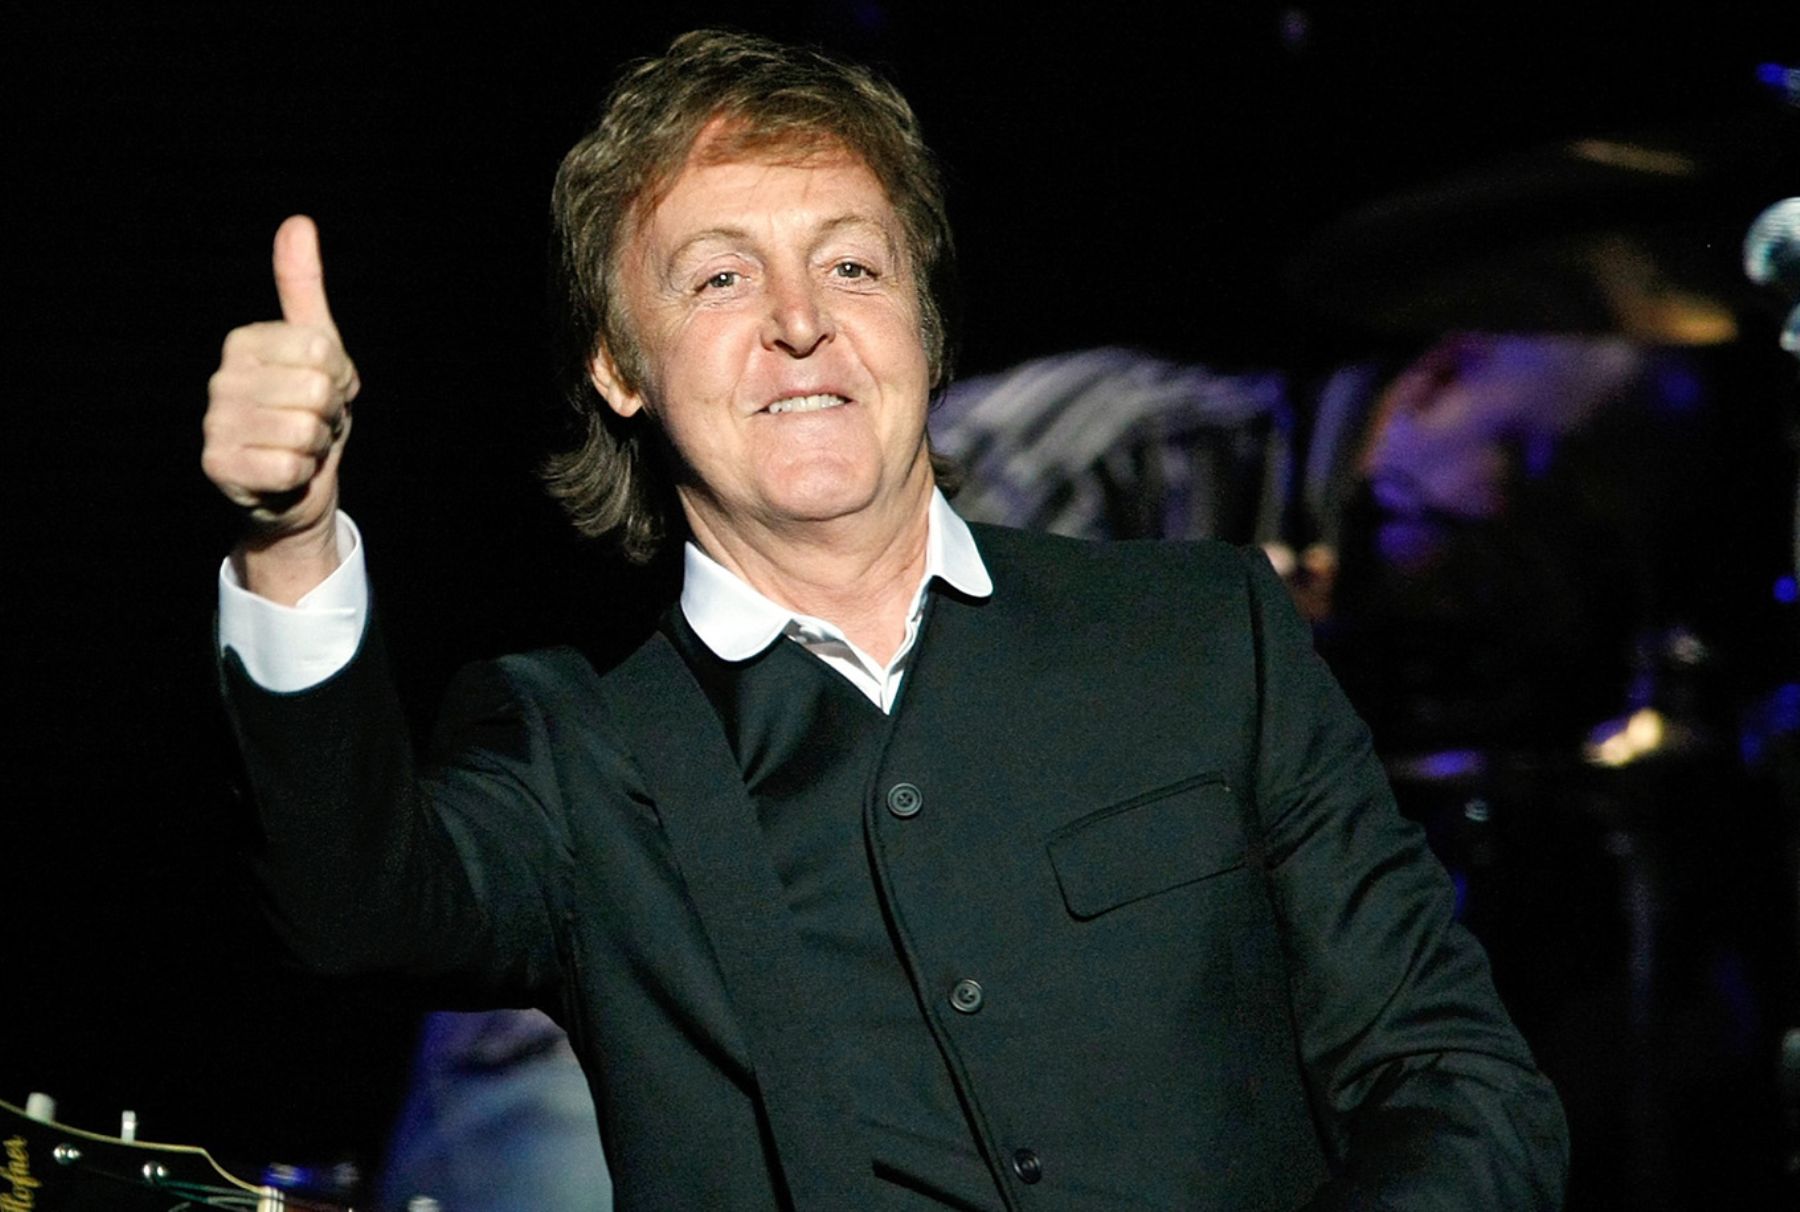 McCartney last performed in Peru in 2009 before 50,000 fans.